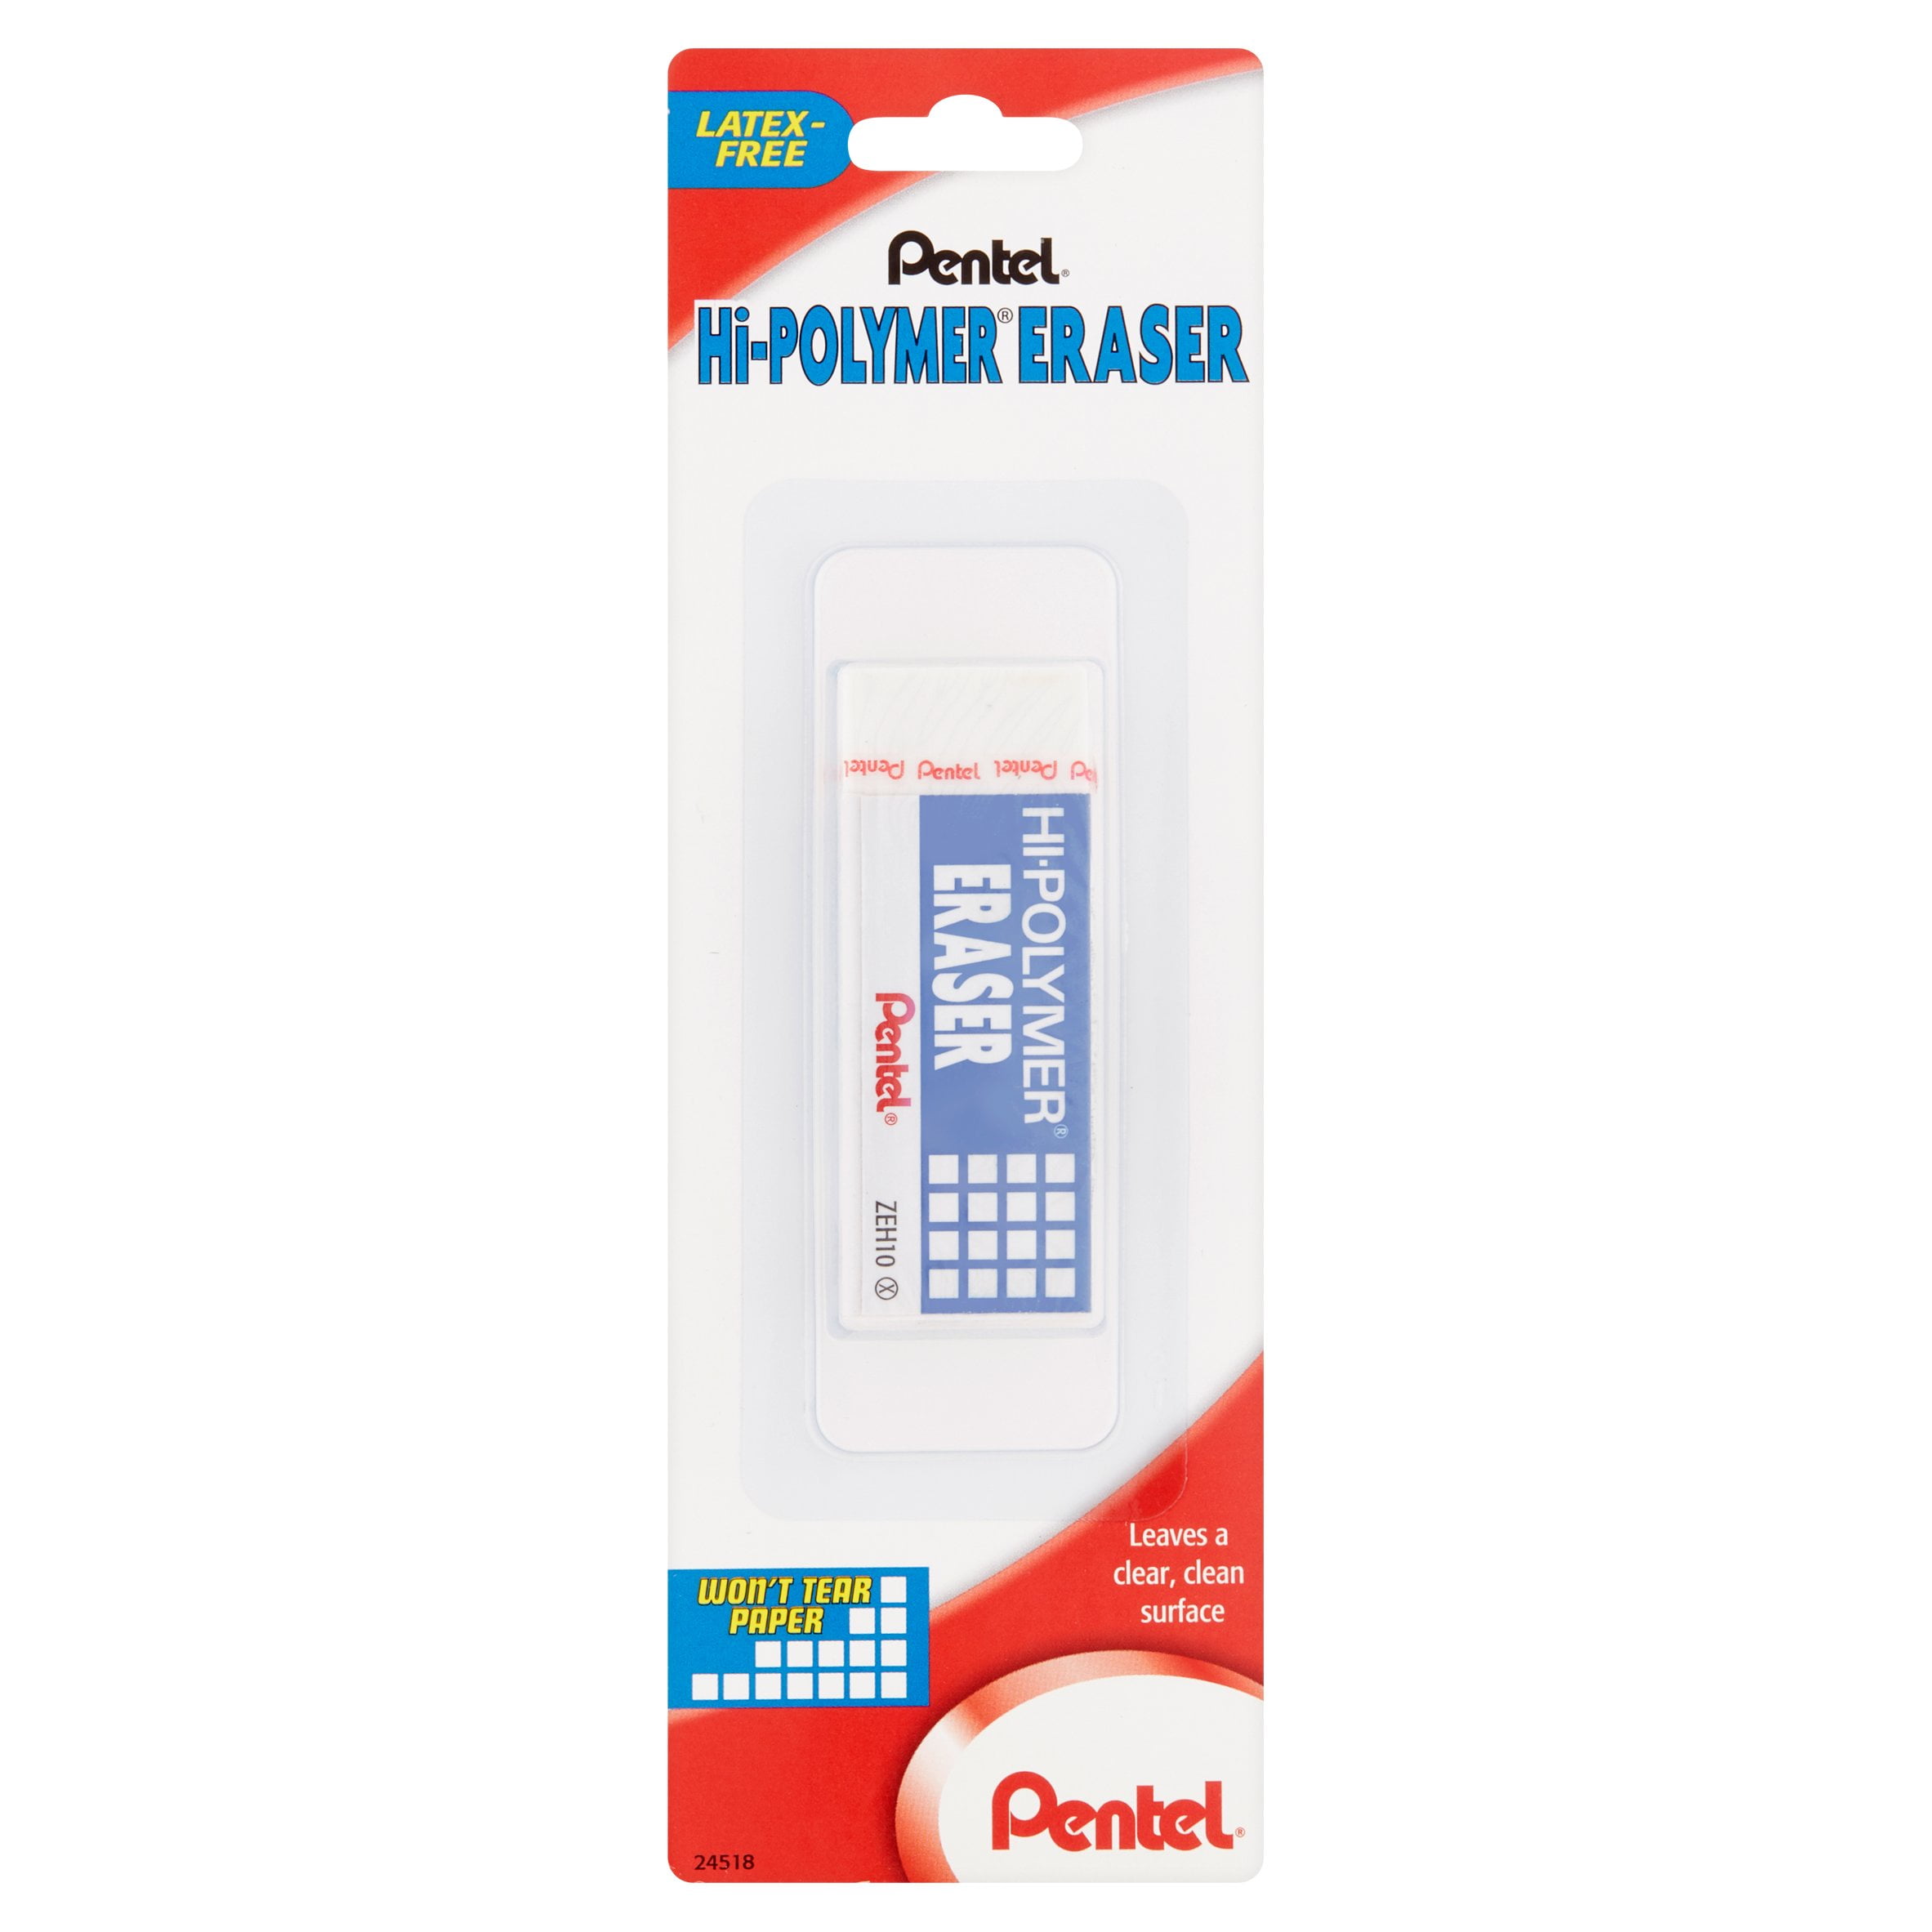 New Pentel Hi-Polymer Eraser with 2 Bonus Alvin vinyl erasers Art drafting  math